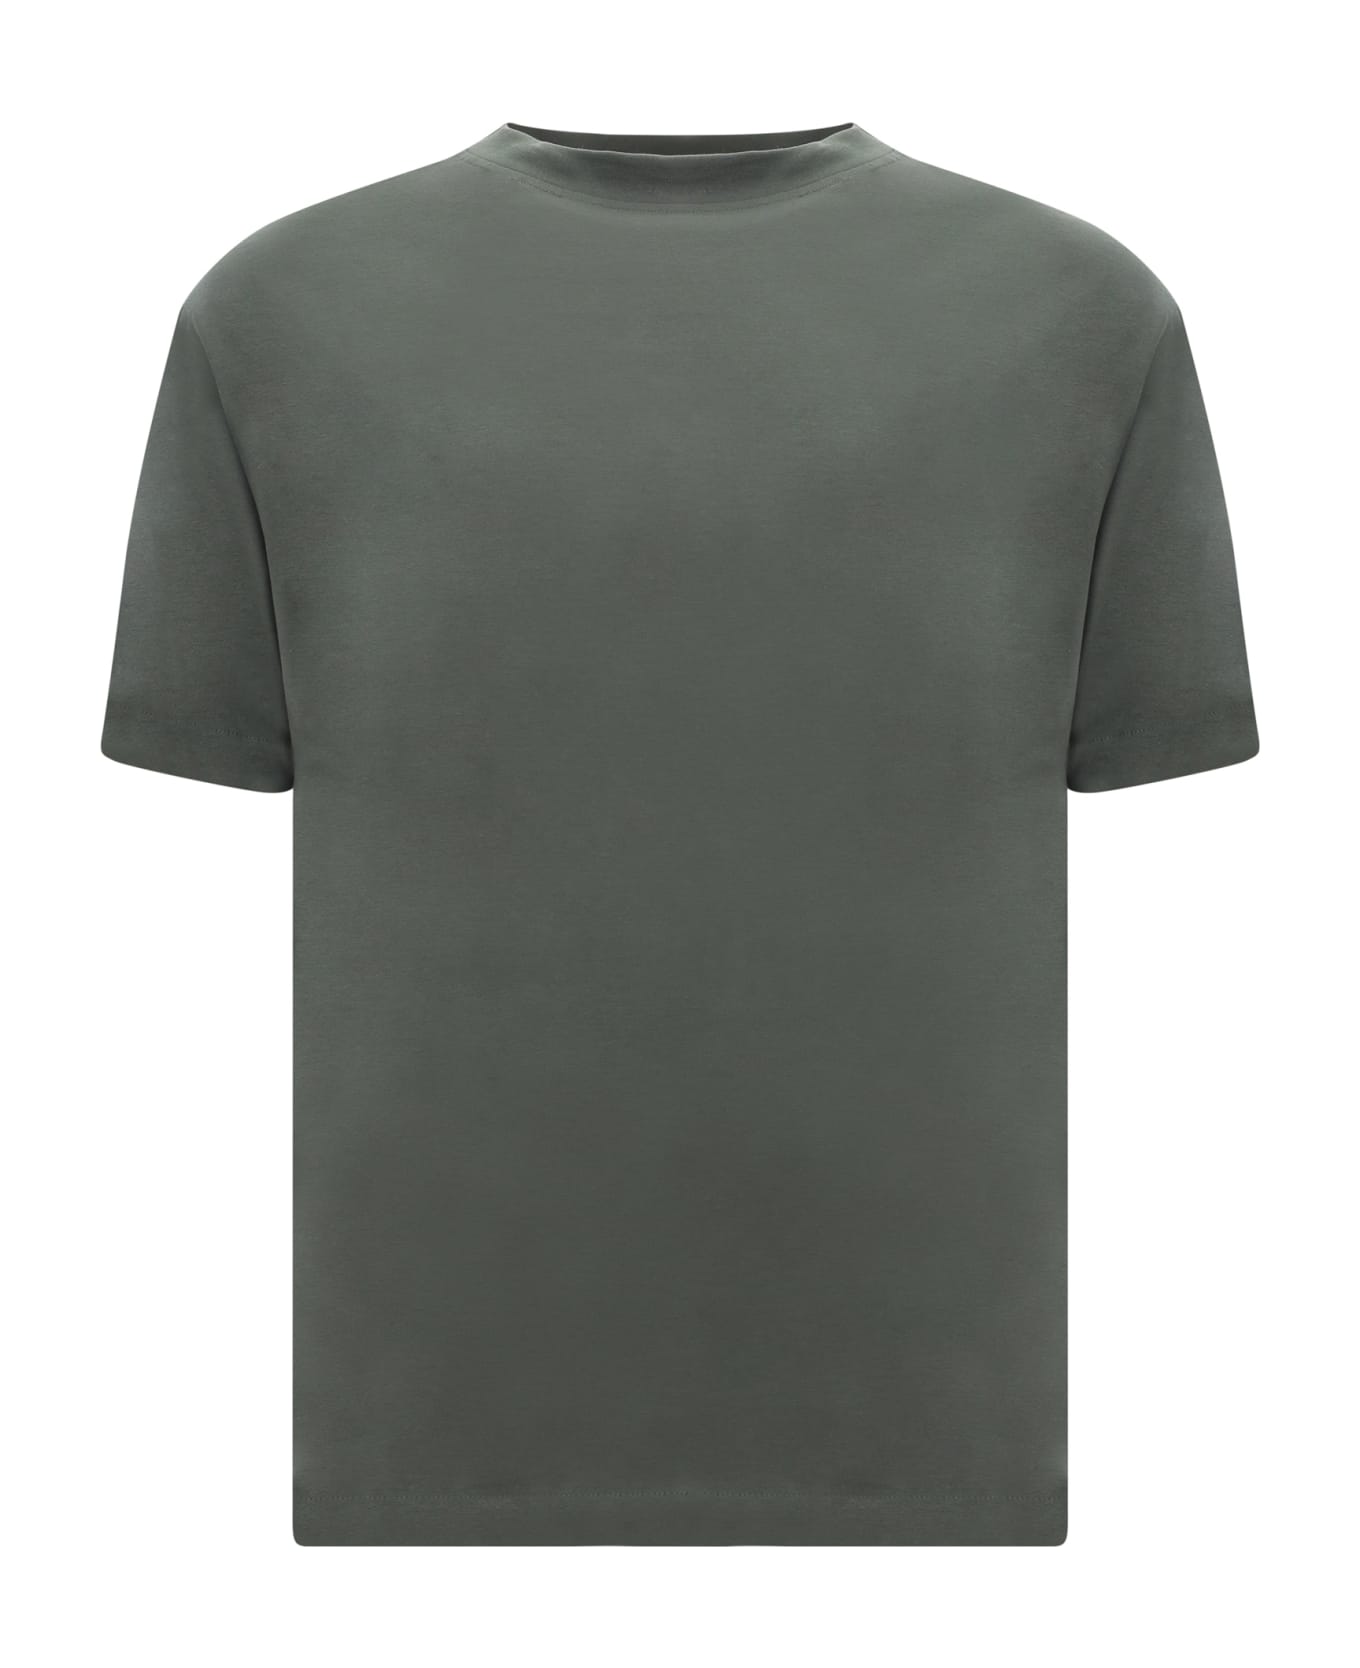 Cruciani T-shirt - 41010006 シャツ